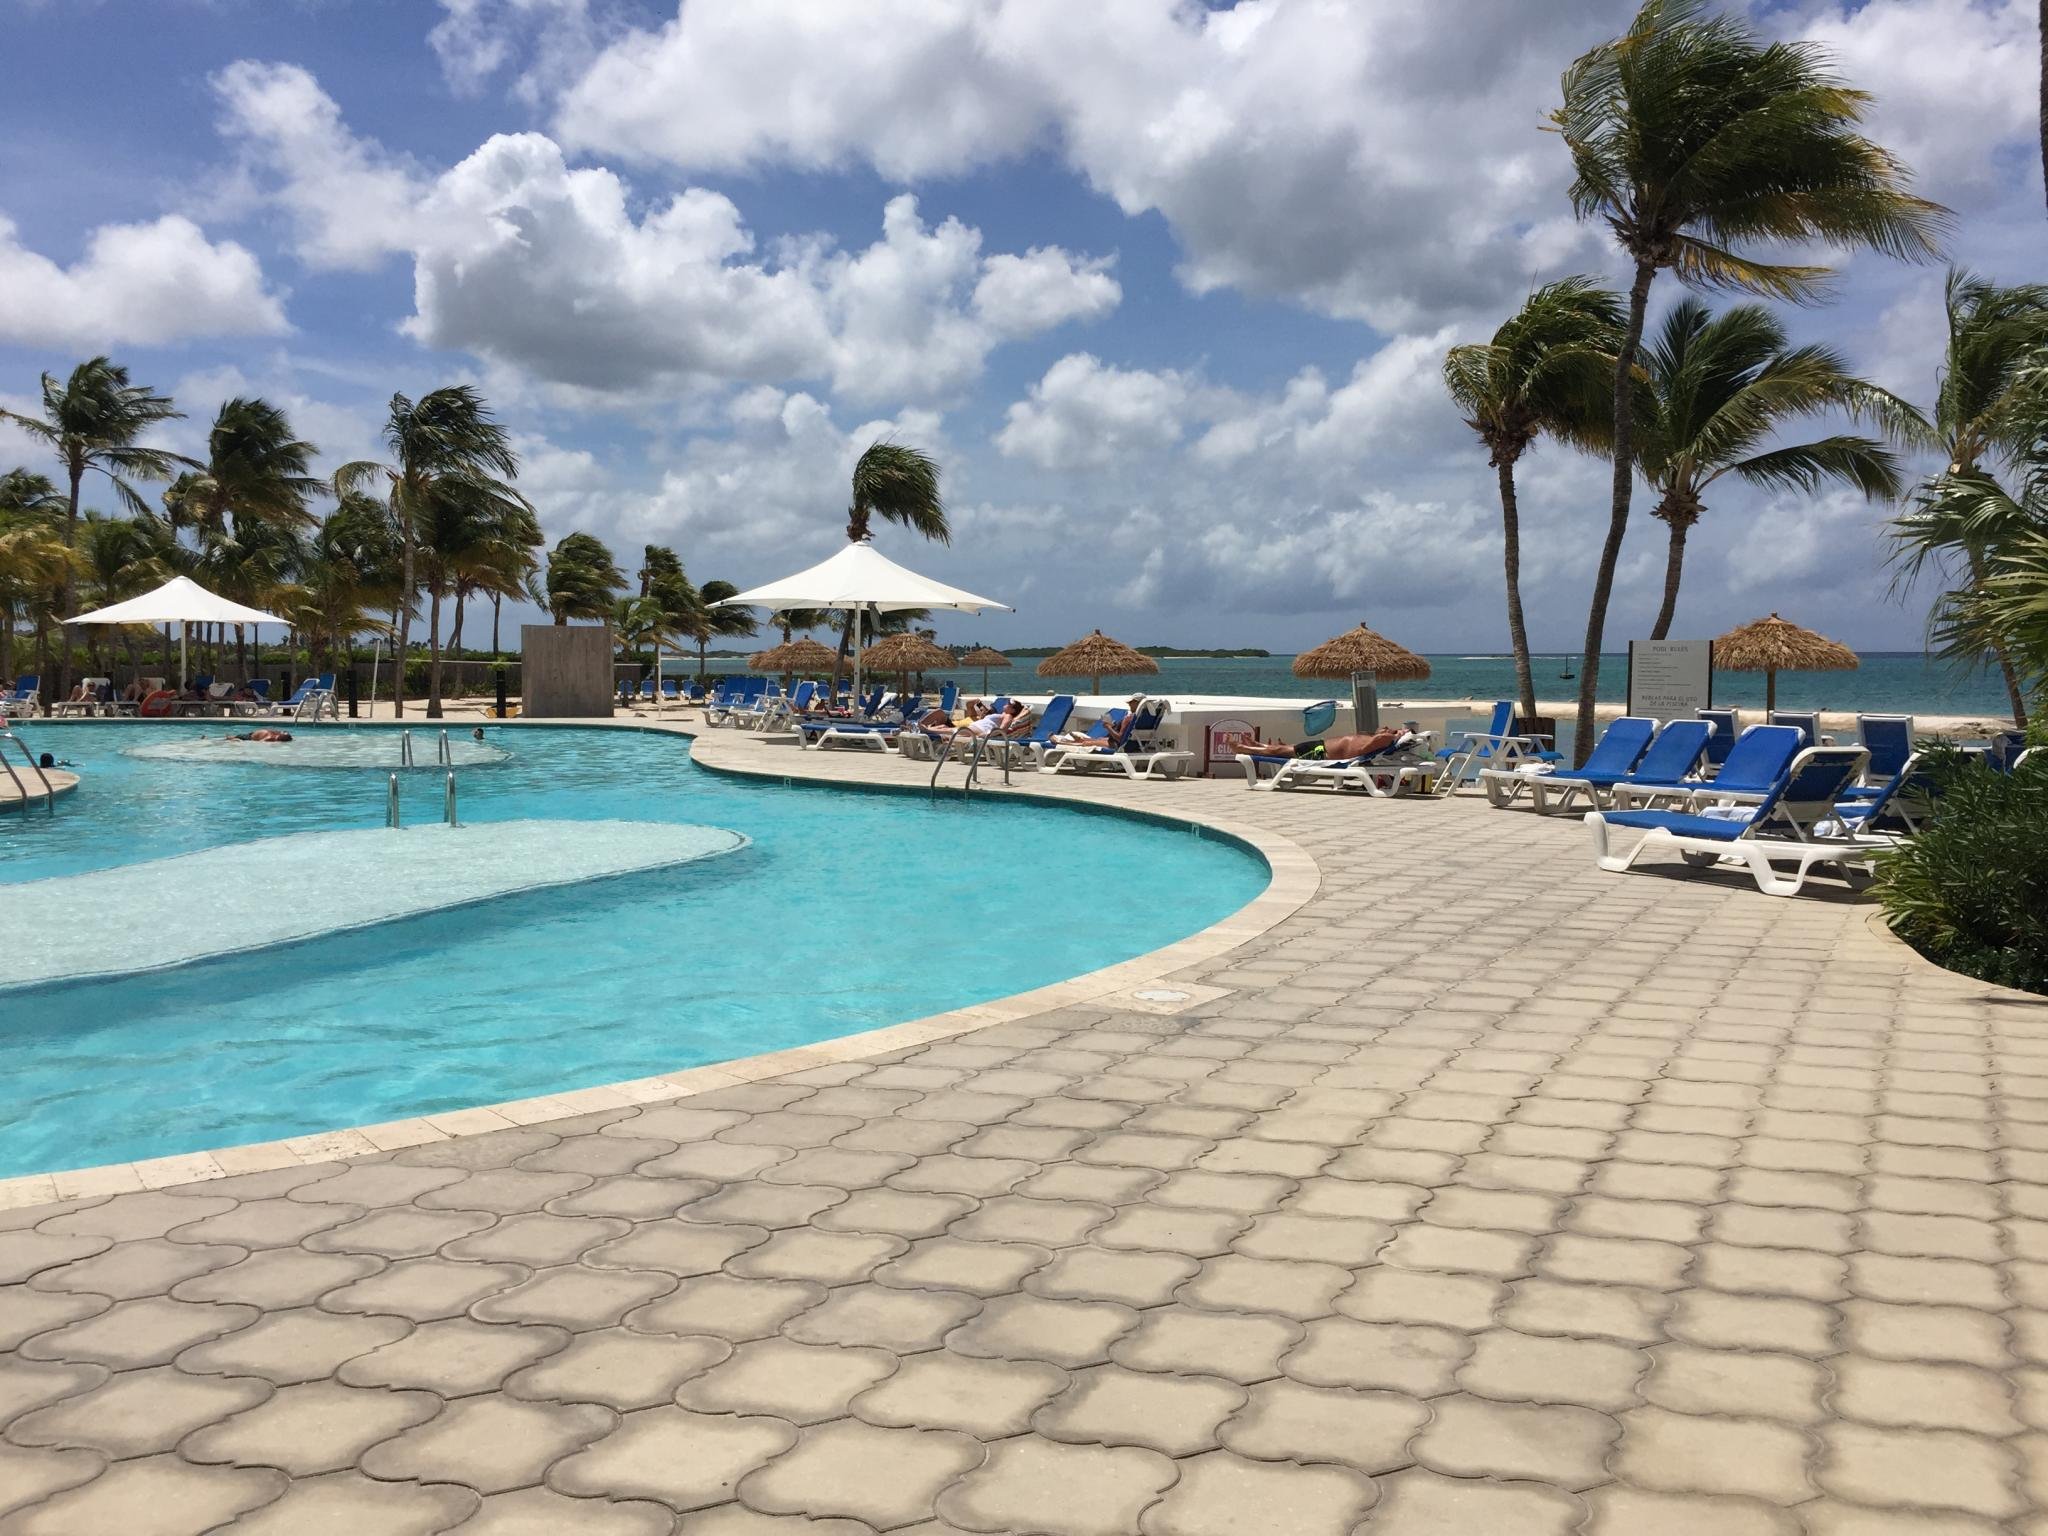 Wind Creek Hospitality buys Renaissance properties in Aruba and